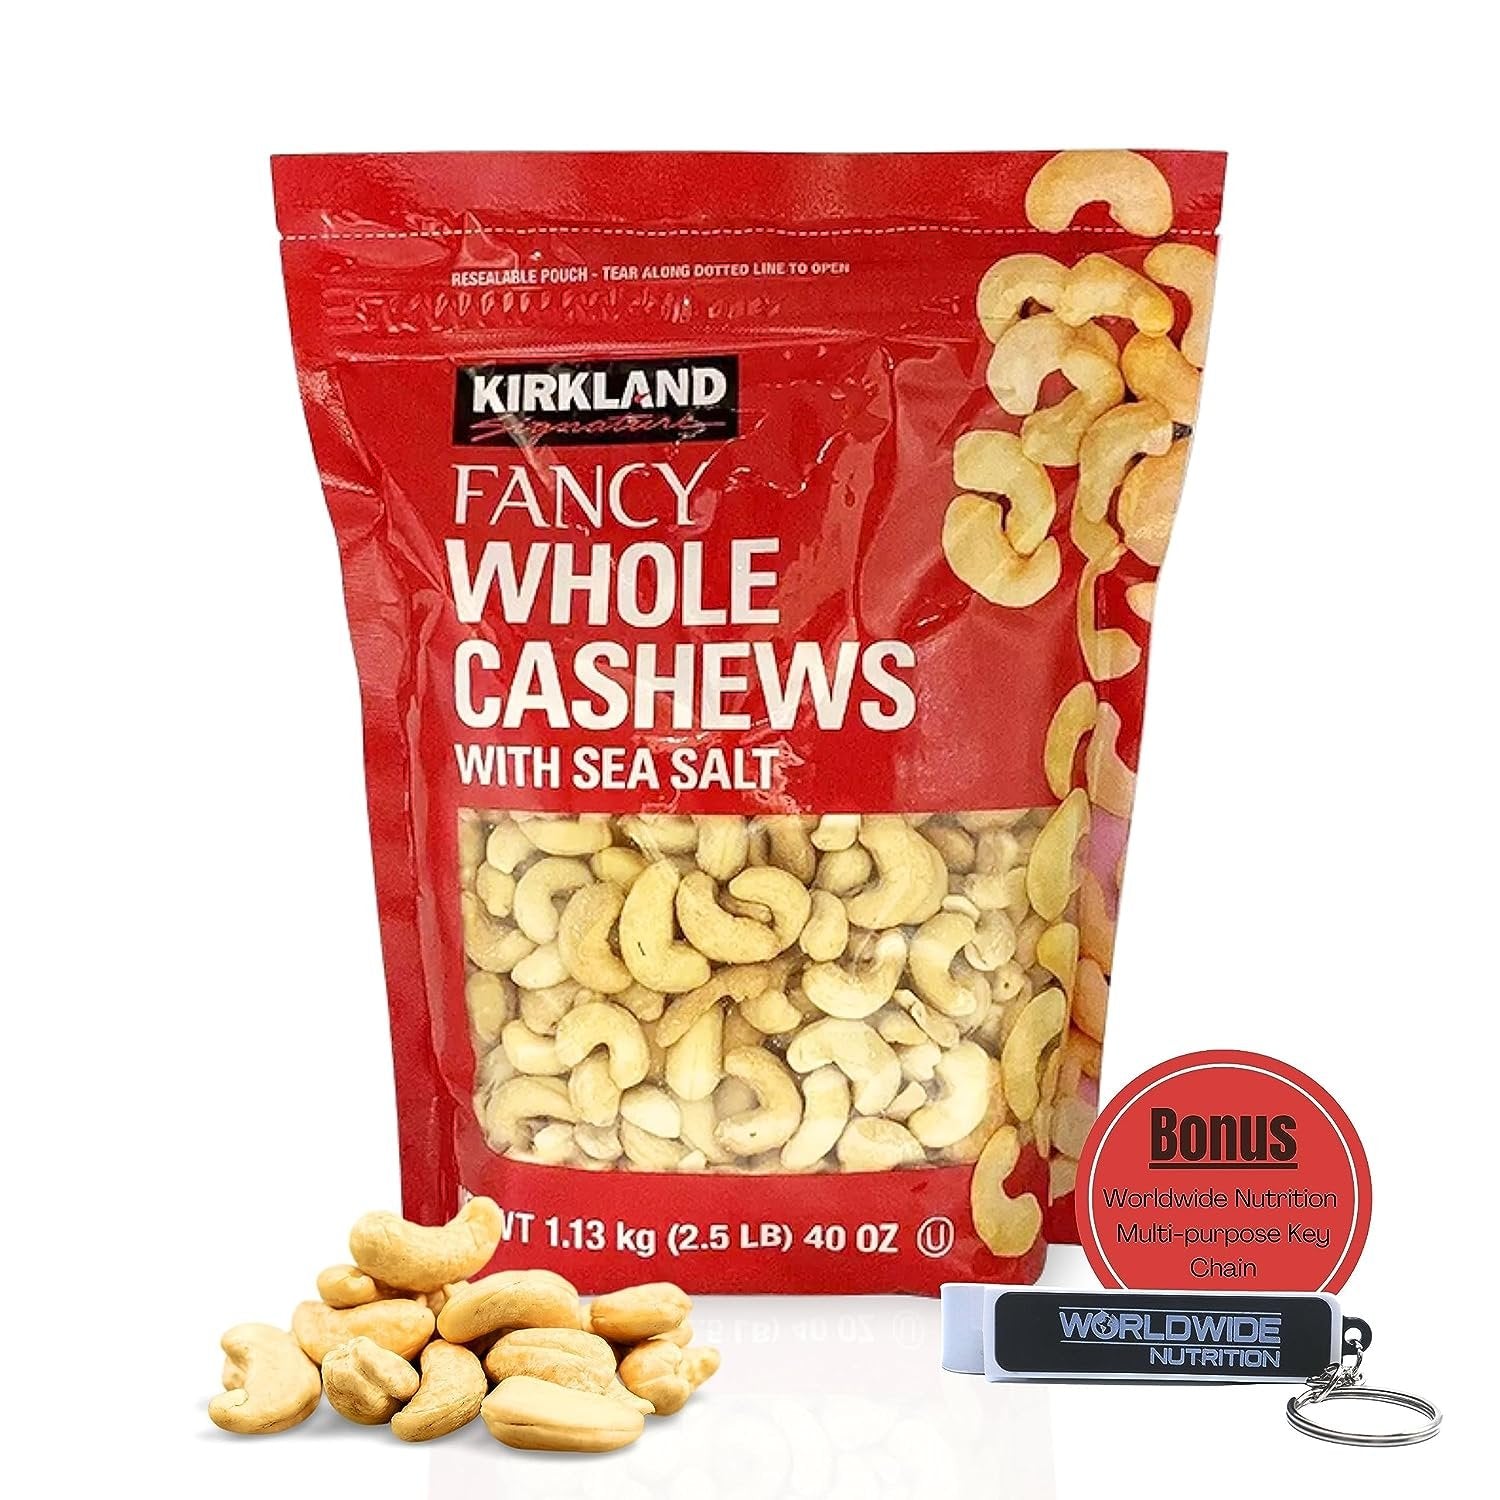 Kirkland Fancy Whole Cashews - Kirkland's Finest Selection of Large Whole Cashews Lightly Salted - Unforgettable Flavor Experience Cashew Nuts - 40oz Premium Cashew Snacks